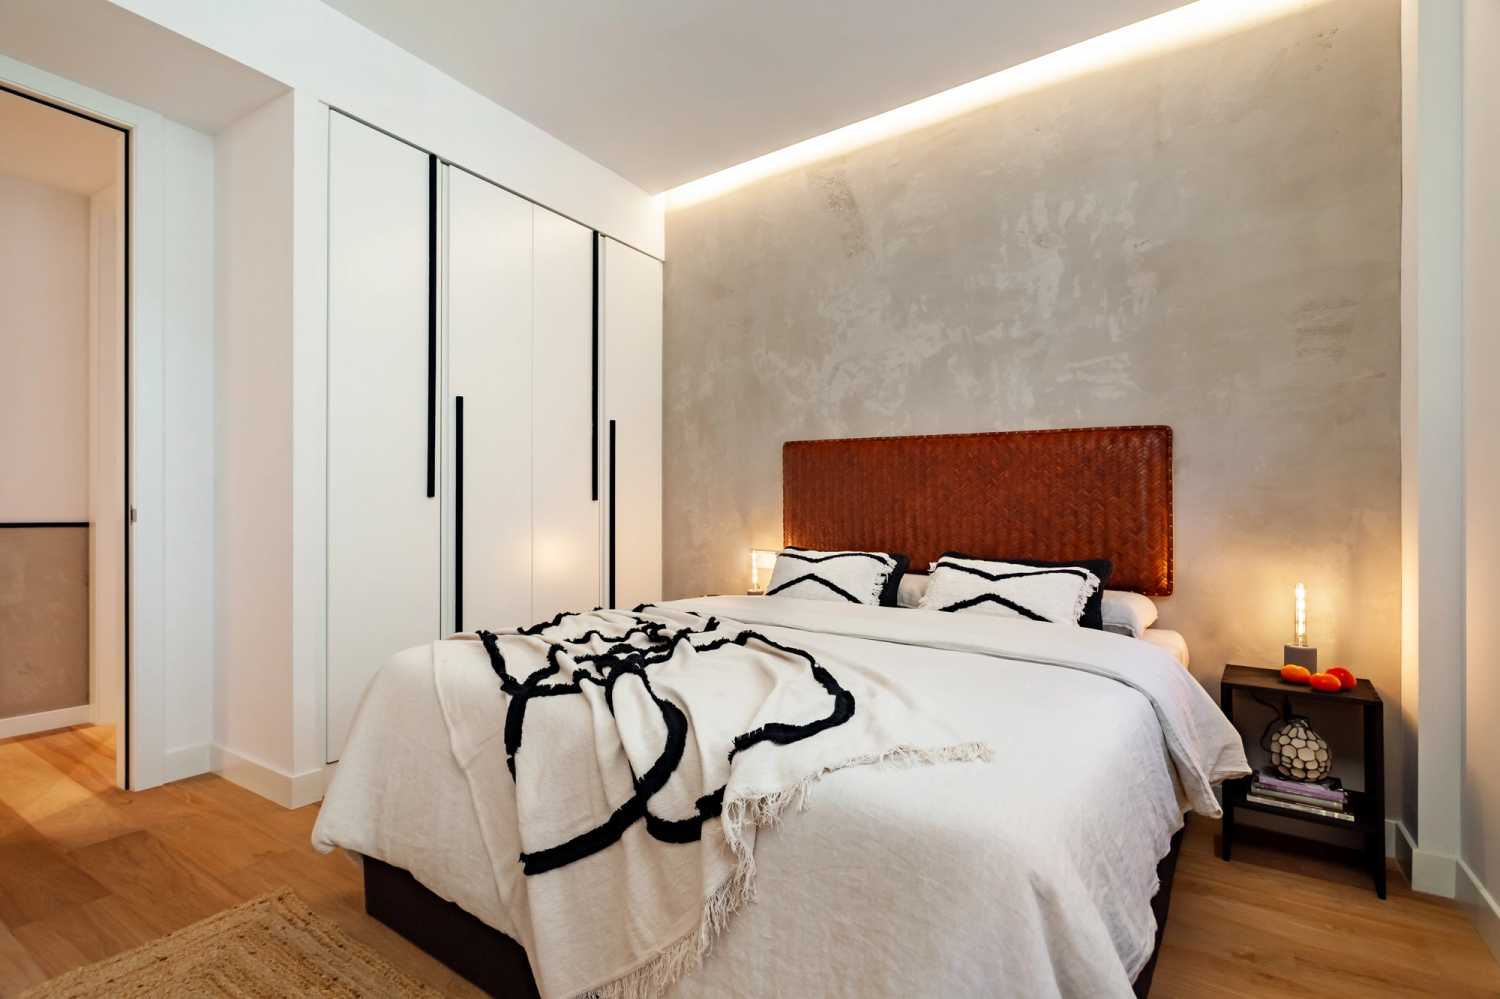 1656336710-ukio-barcelona-double-bed-bedroom-with-cupboard.jpg